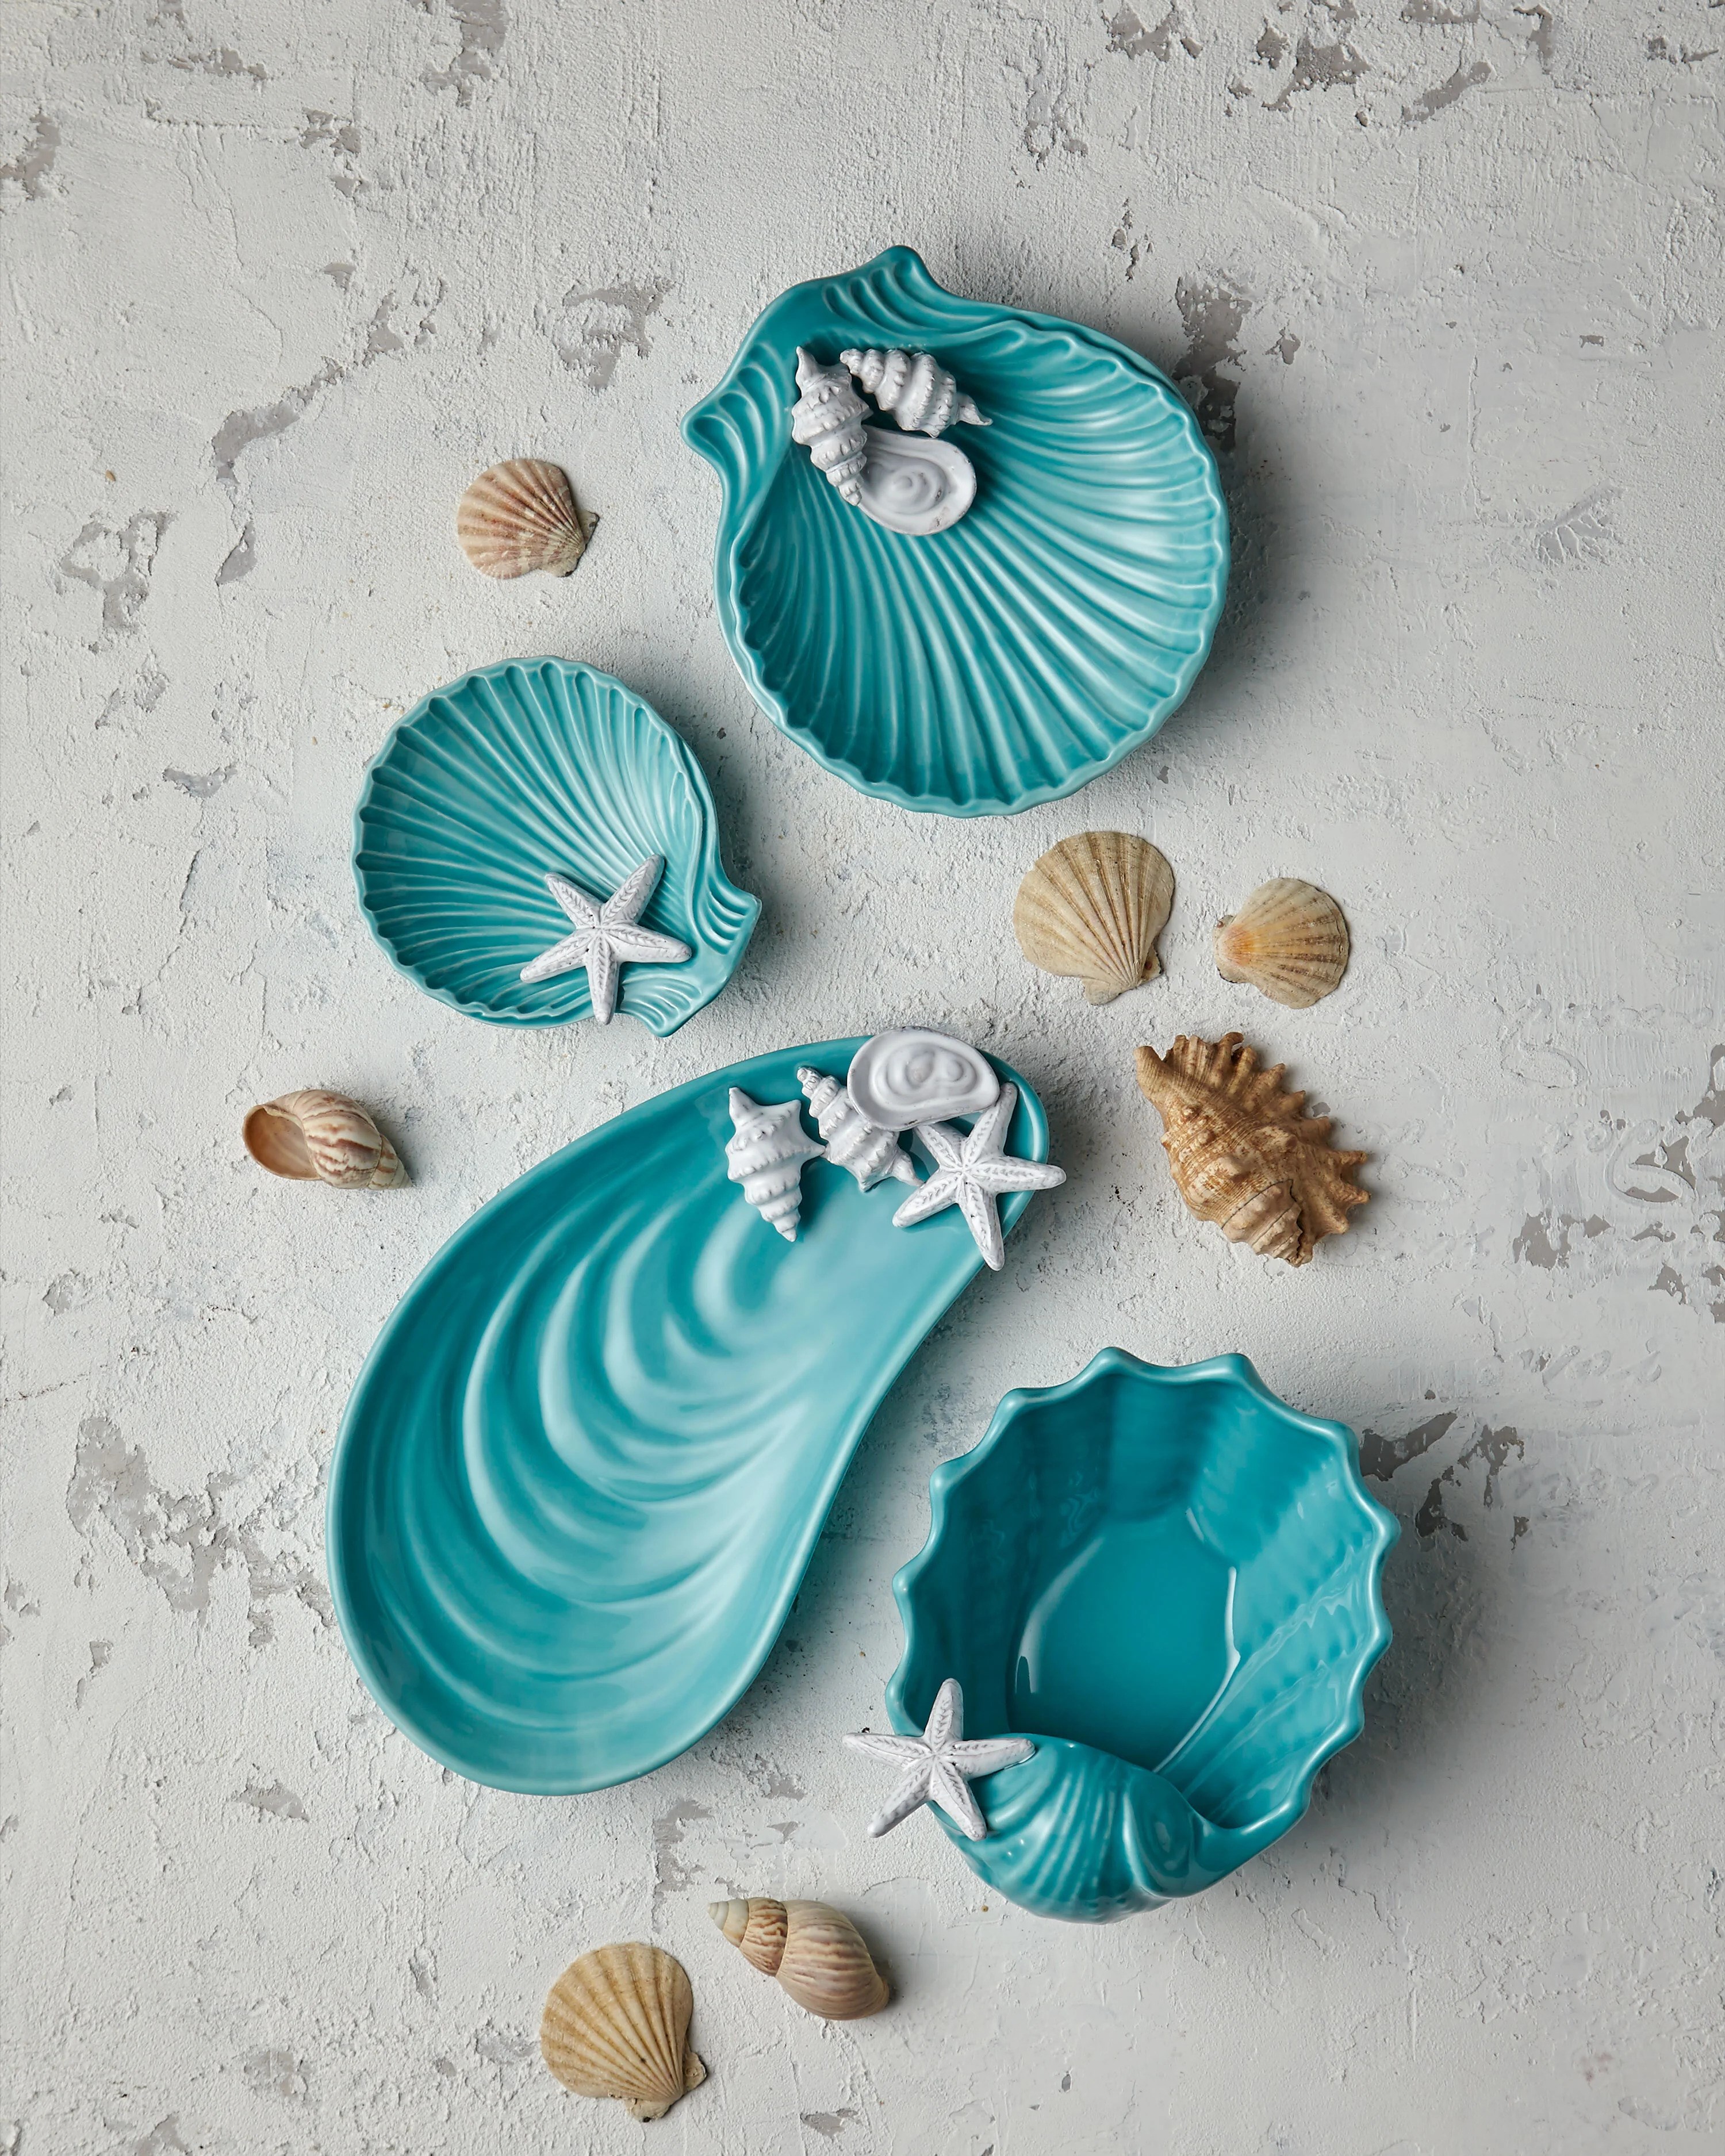 Edelweiss Italy Frutti Di Mare Blue Ceramic Serving Plate 20*17 cm EW3111T 